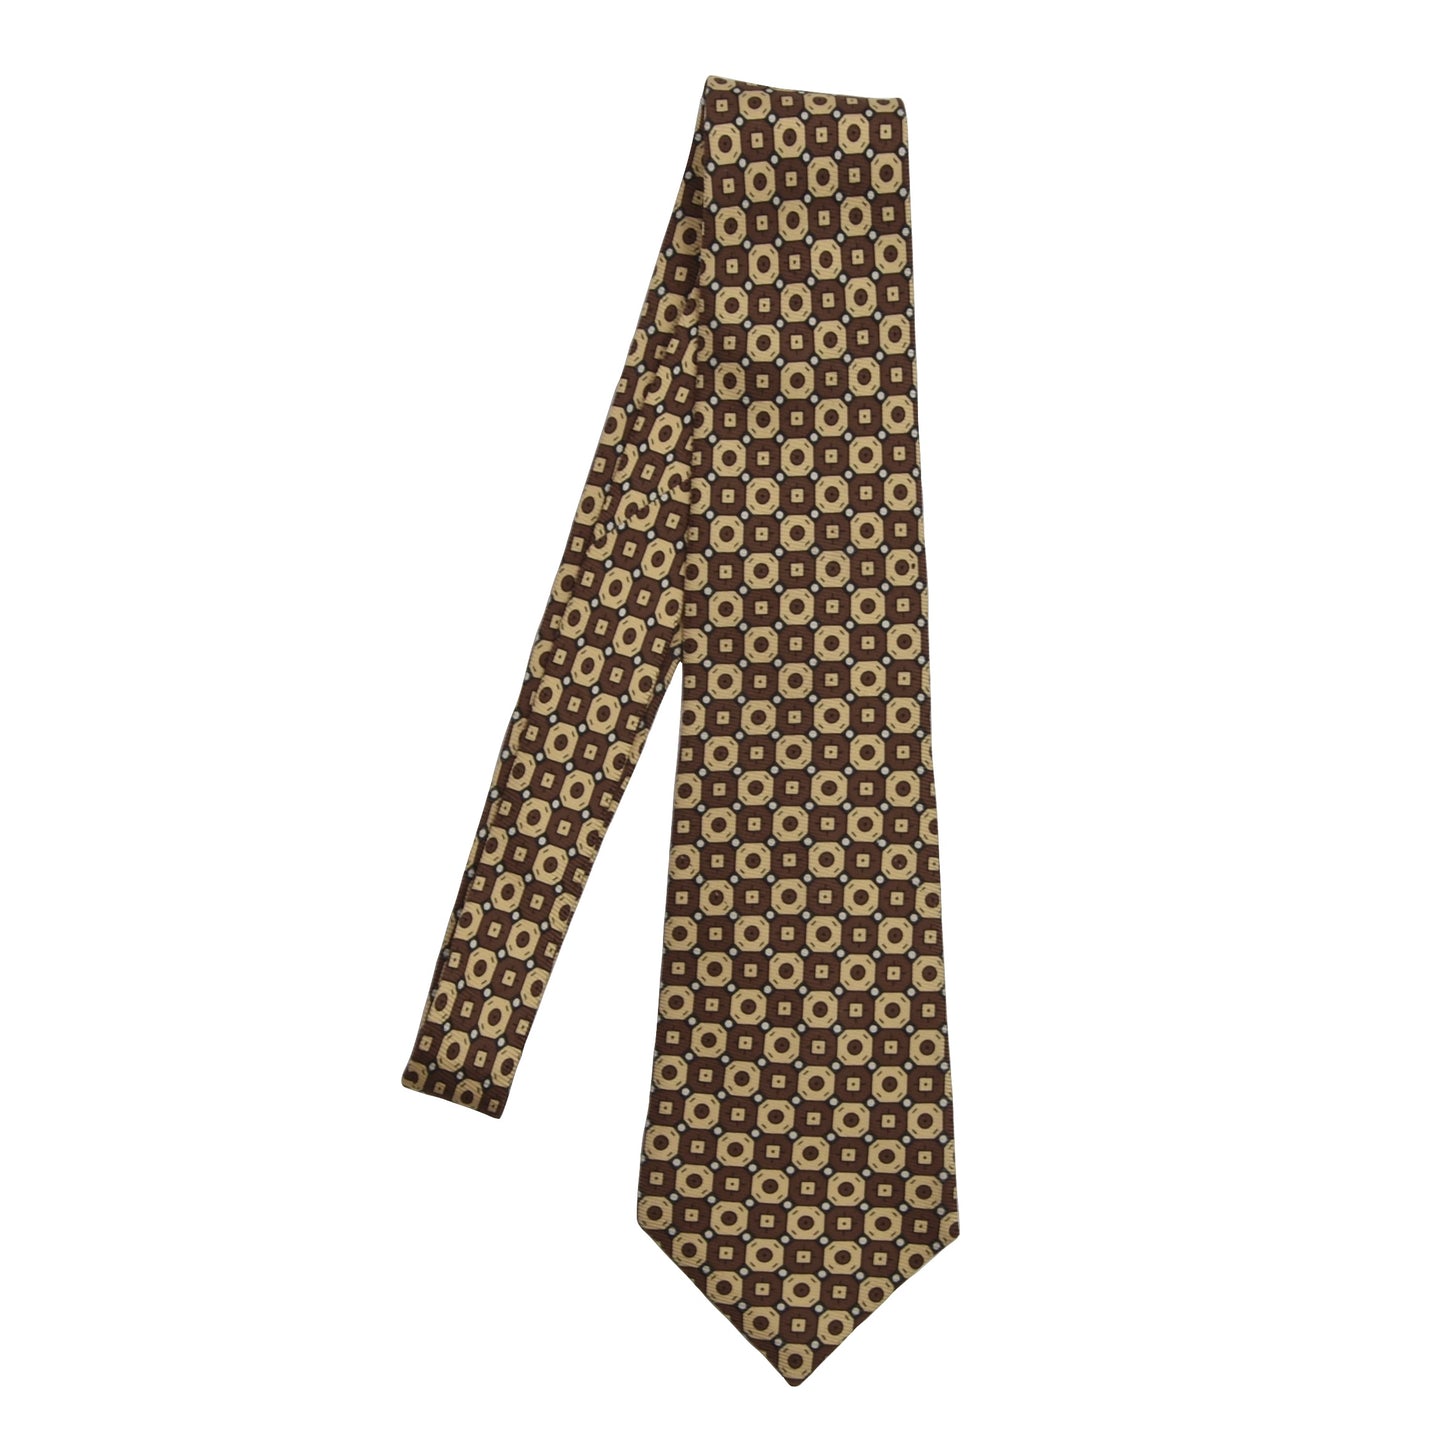 Franck Namani 7 Fold Silk Tie